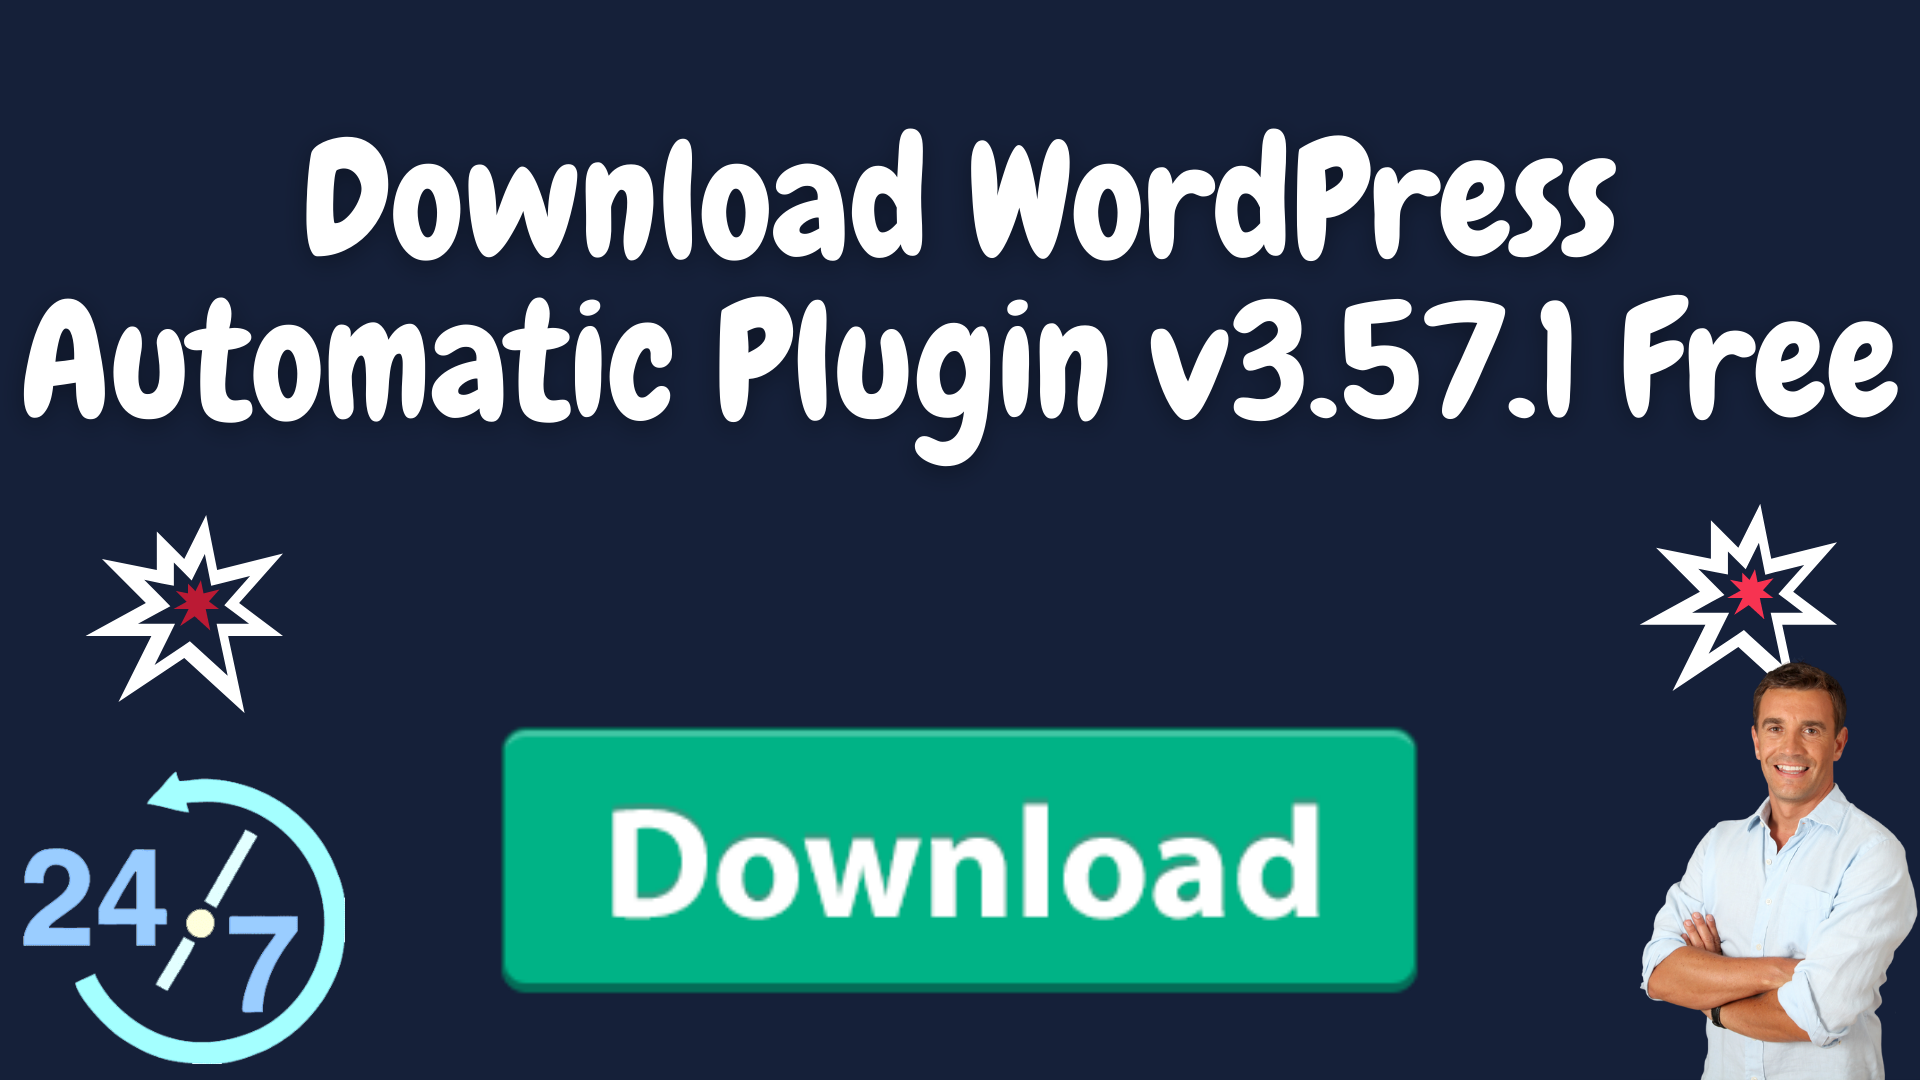 Kosten onaangenaam kom tot rust Download WordPress Automatic Plugin v3.57.1 Free - US7P - GPL Premium  wordpress Themes ✔️ Plugins for FREE